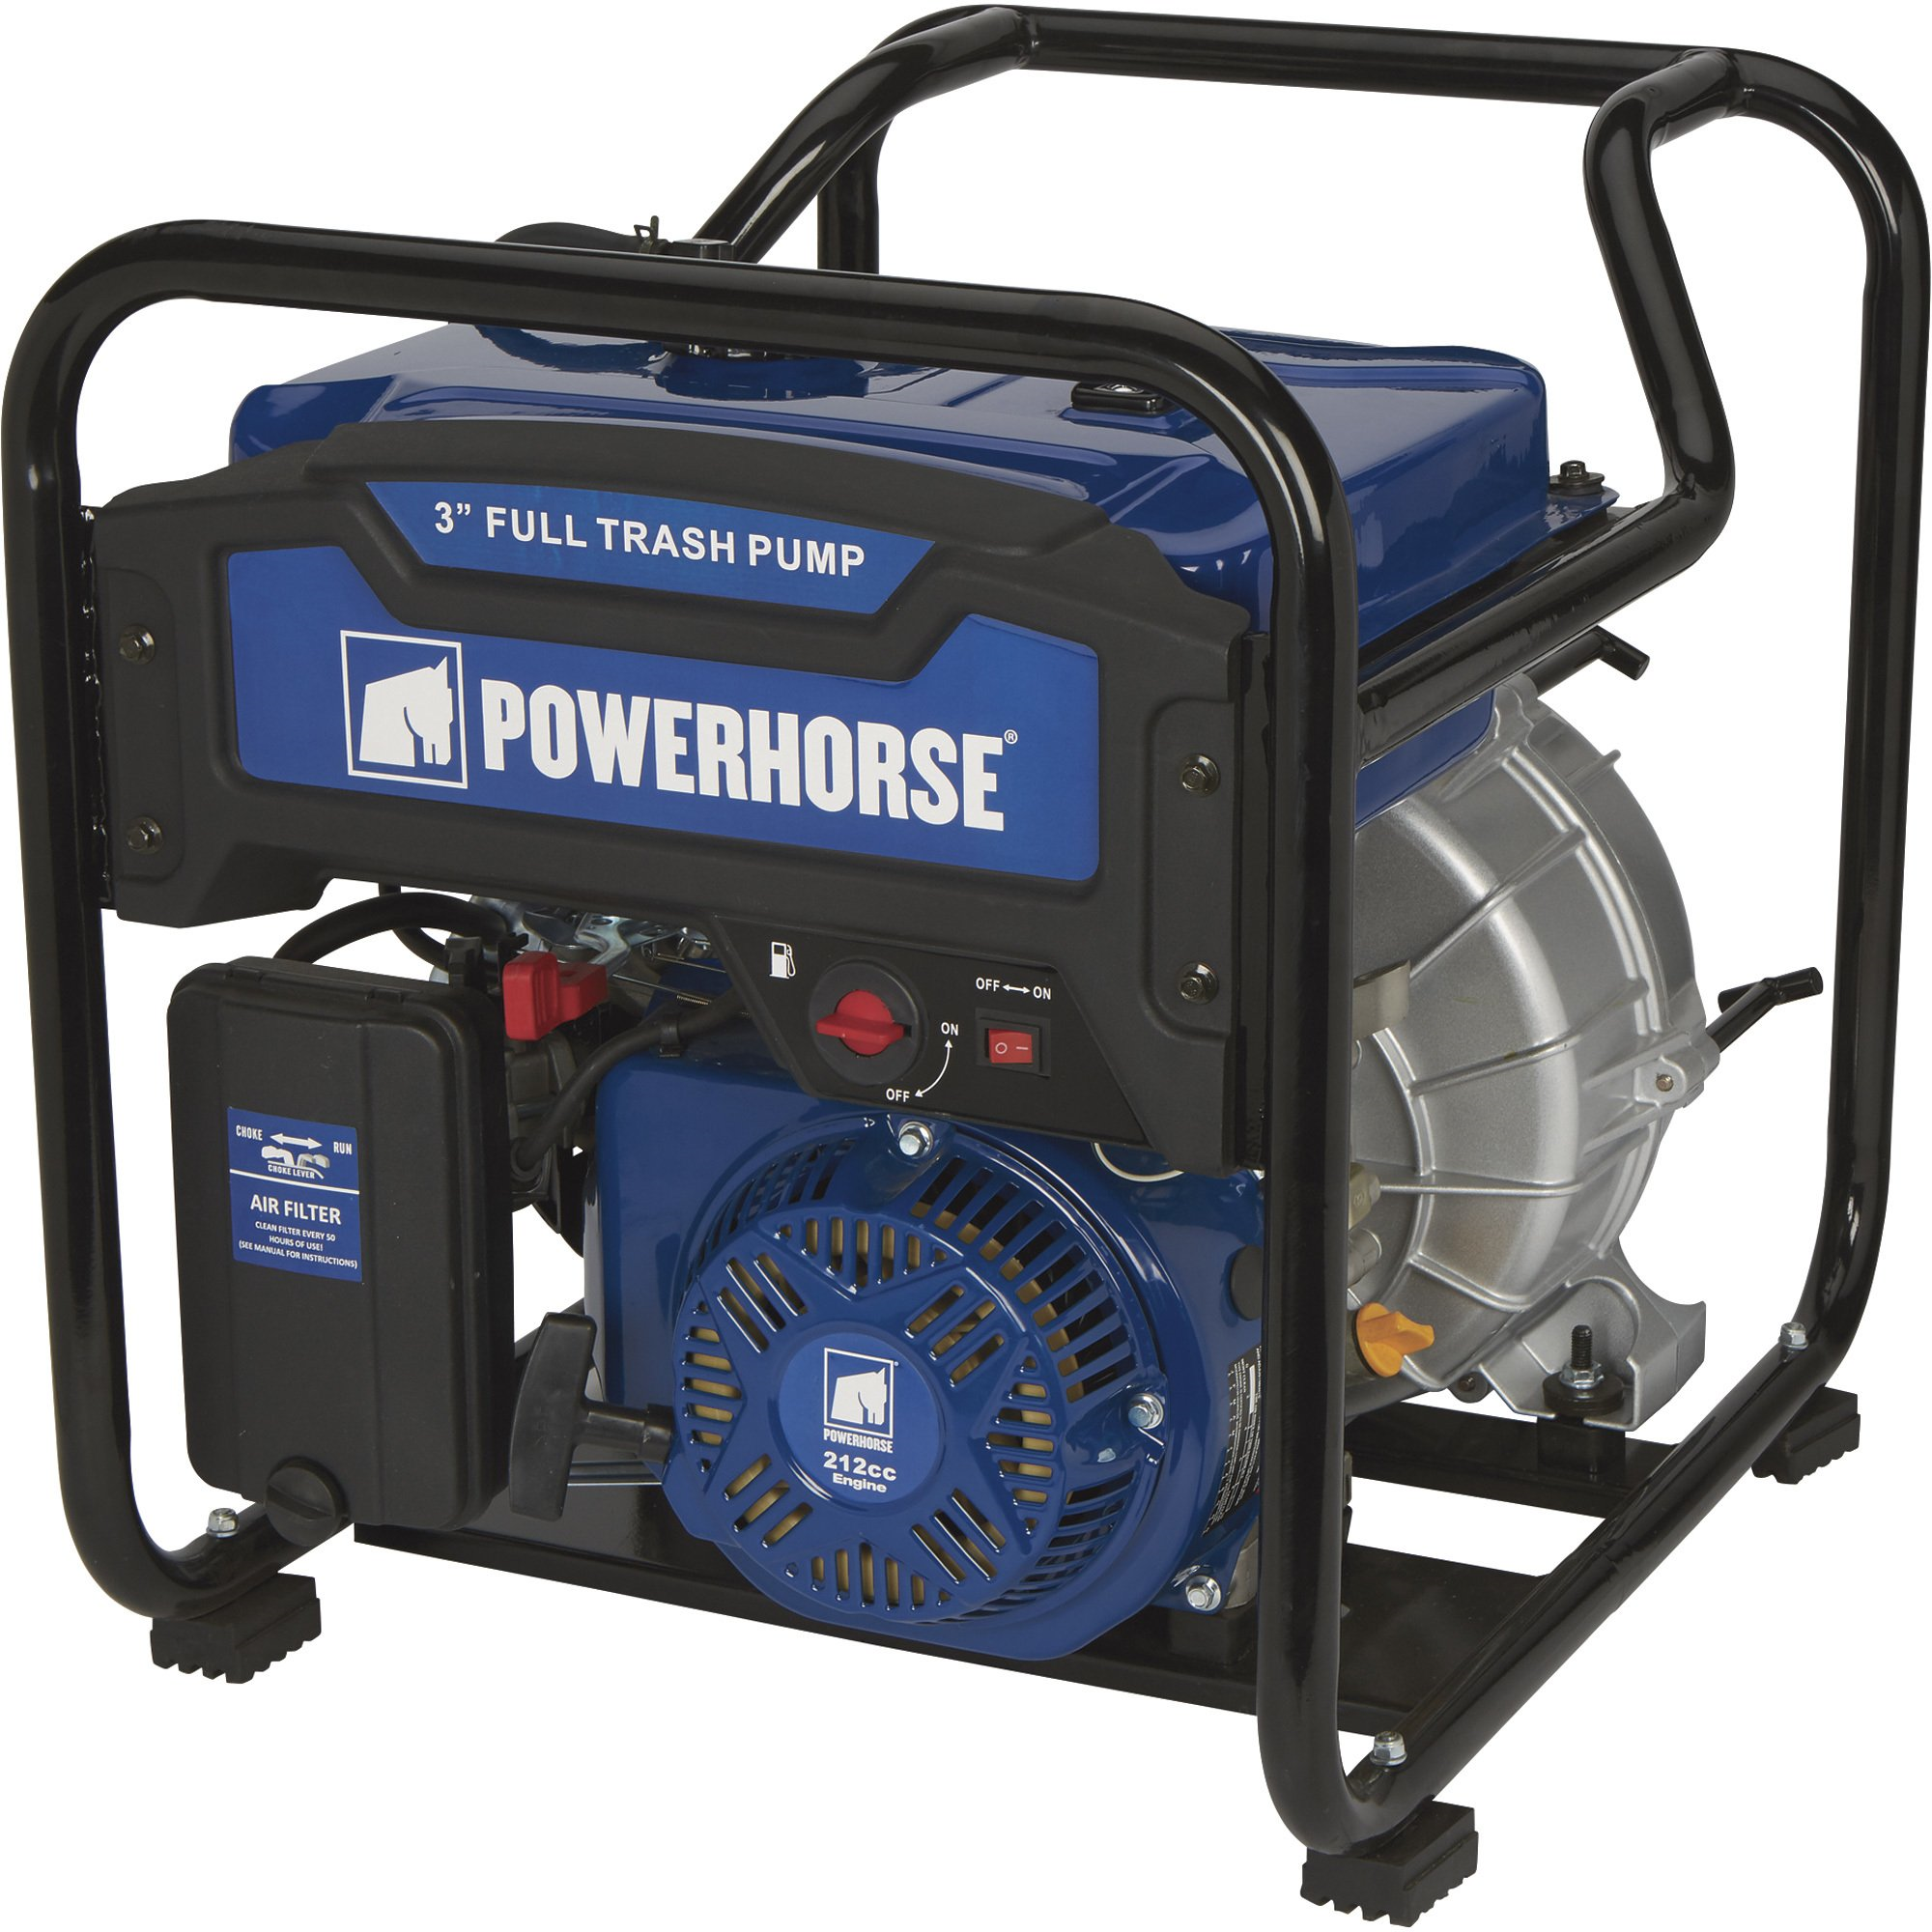 Powerhorse, Powerhorse 750127 Full Trash 3" Water Pump Extended Run 197 GPM Solids Capacity 1 1/8" New